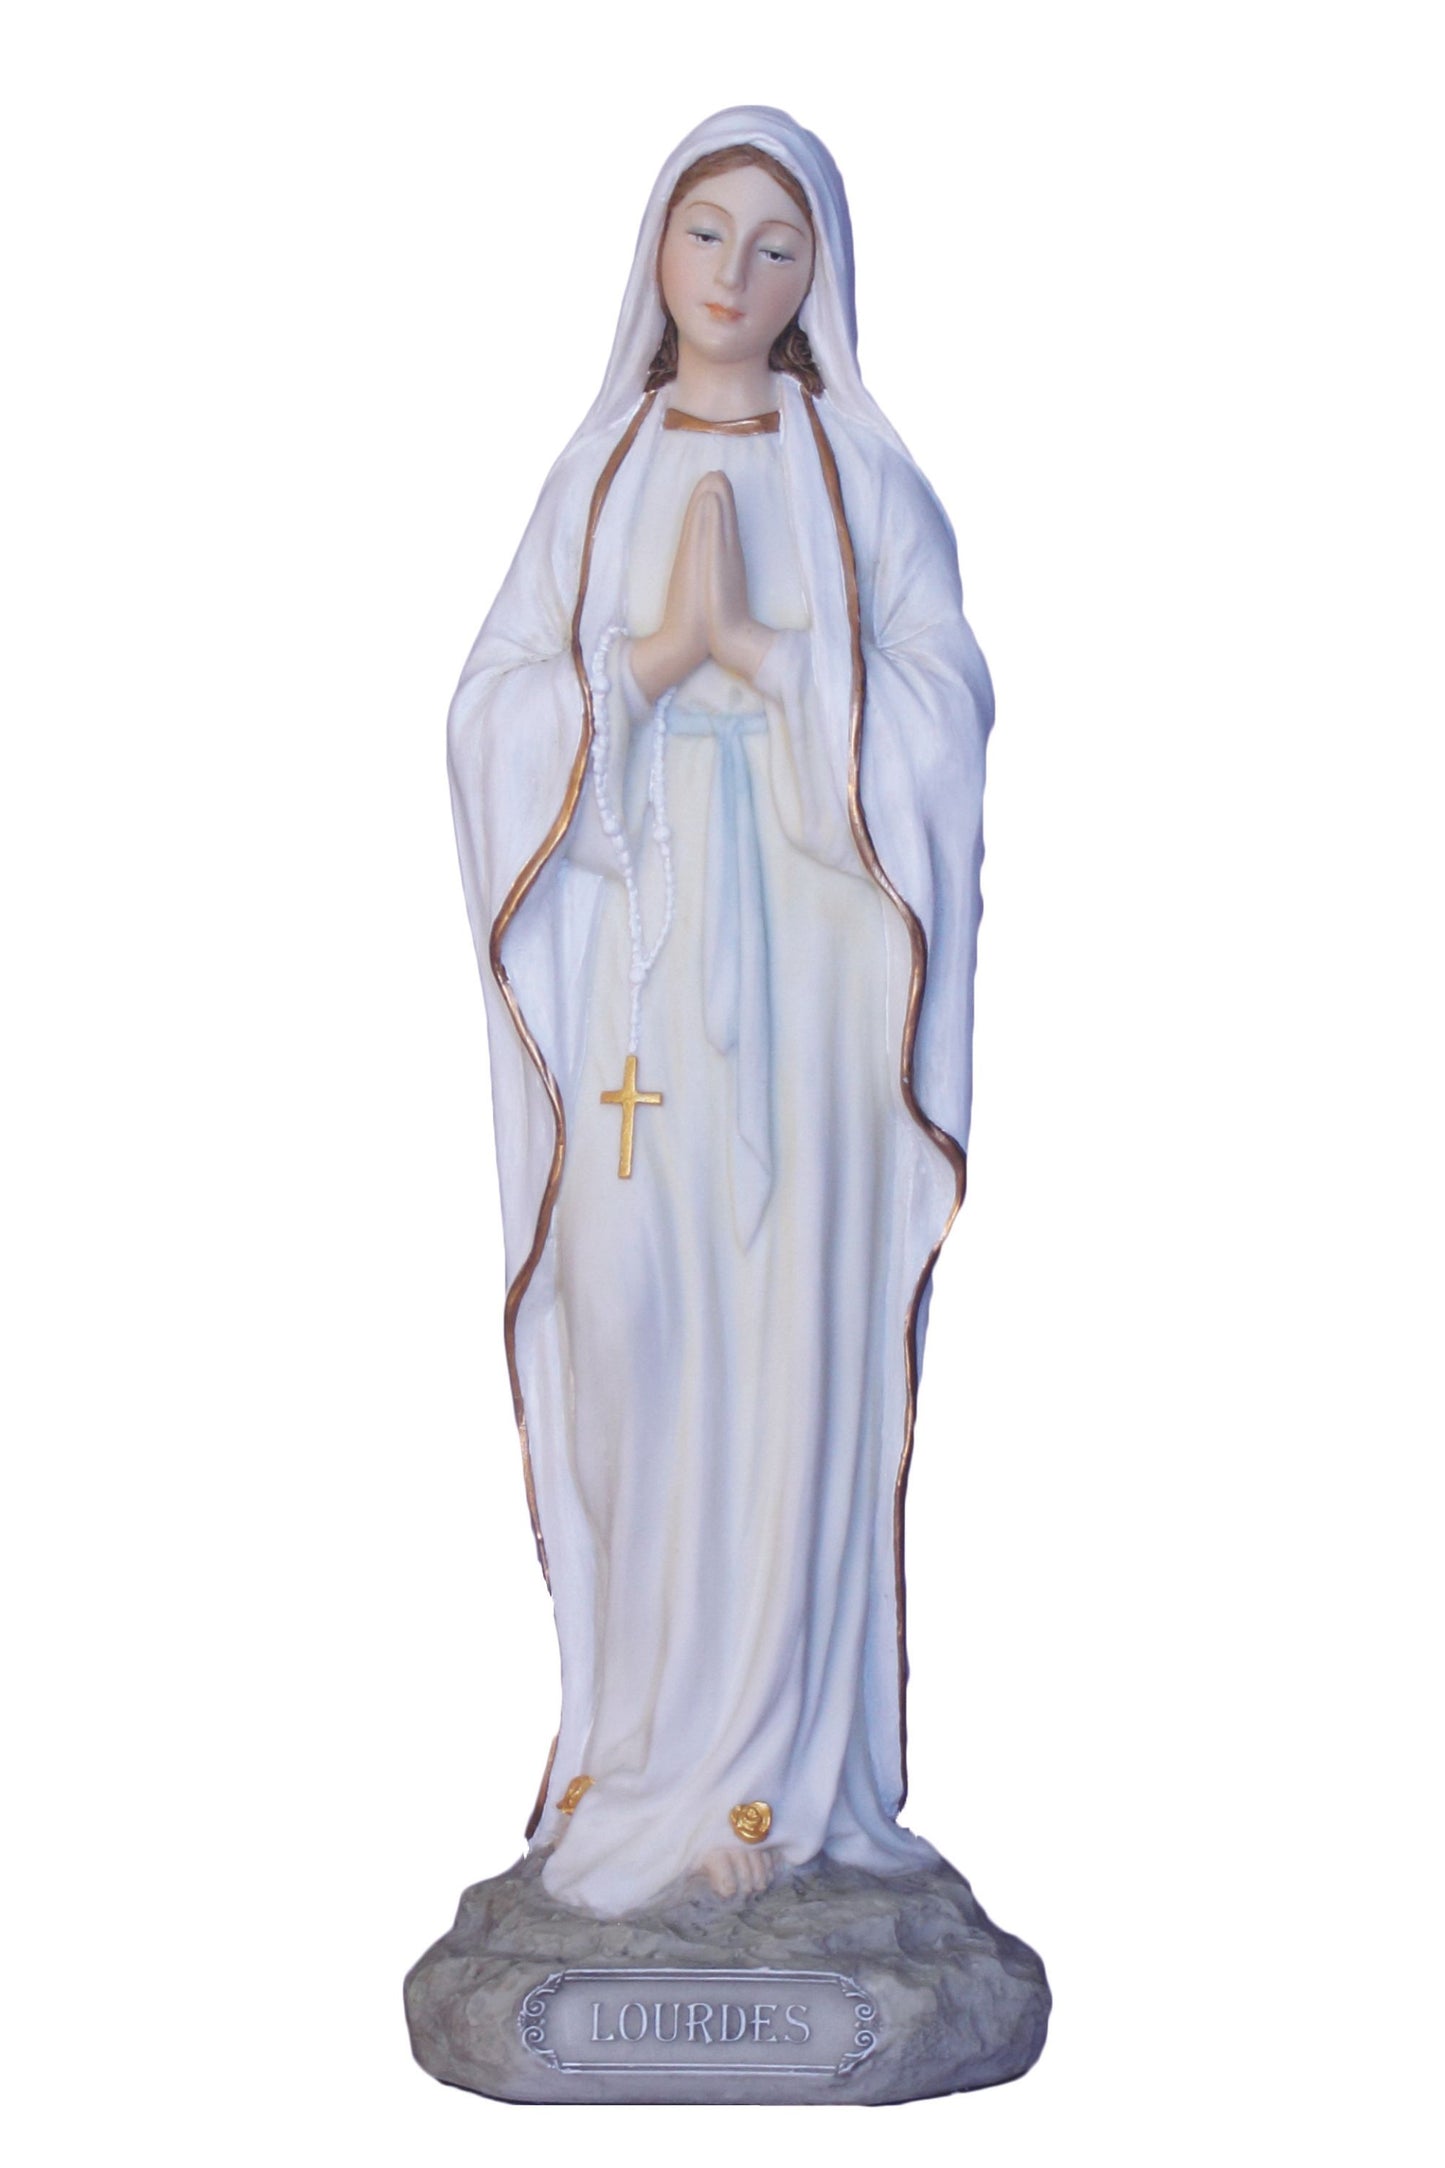 SR-76294-C Our Lady of Lourdes in Color 8"